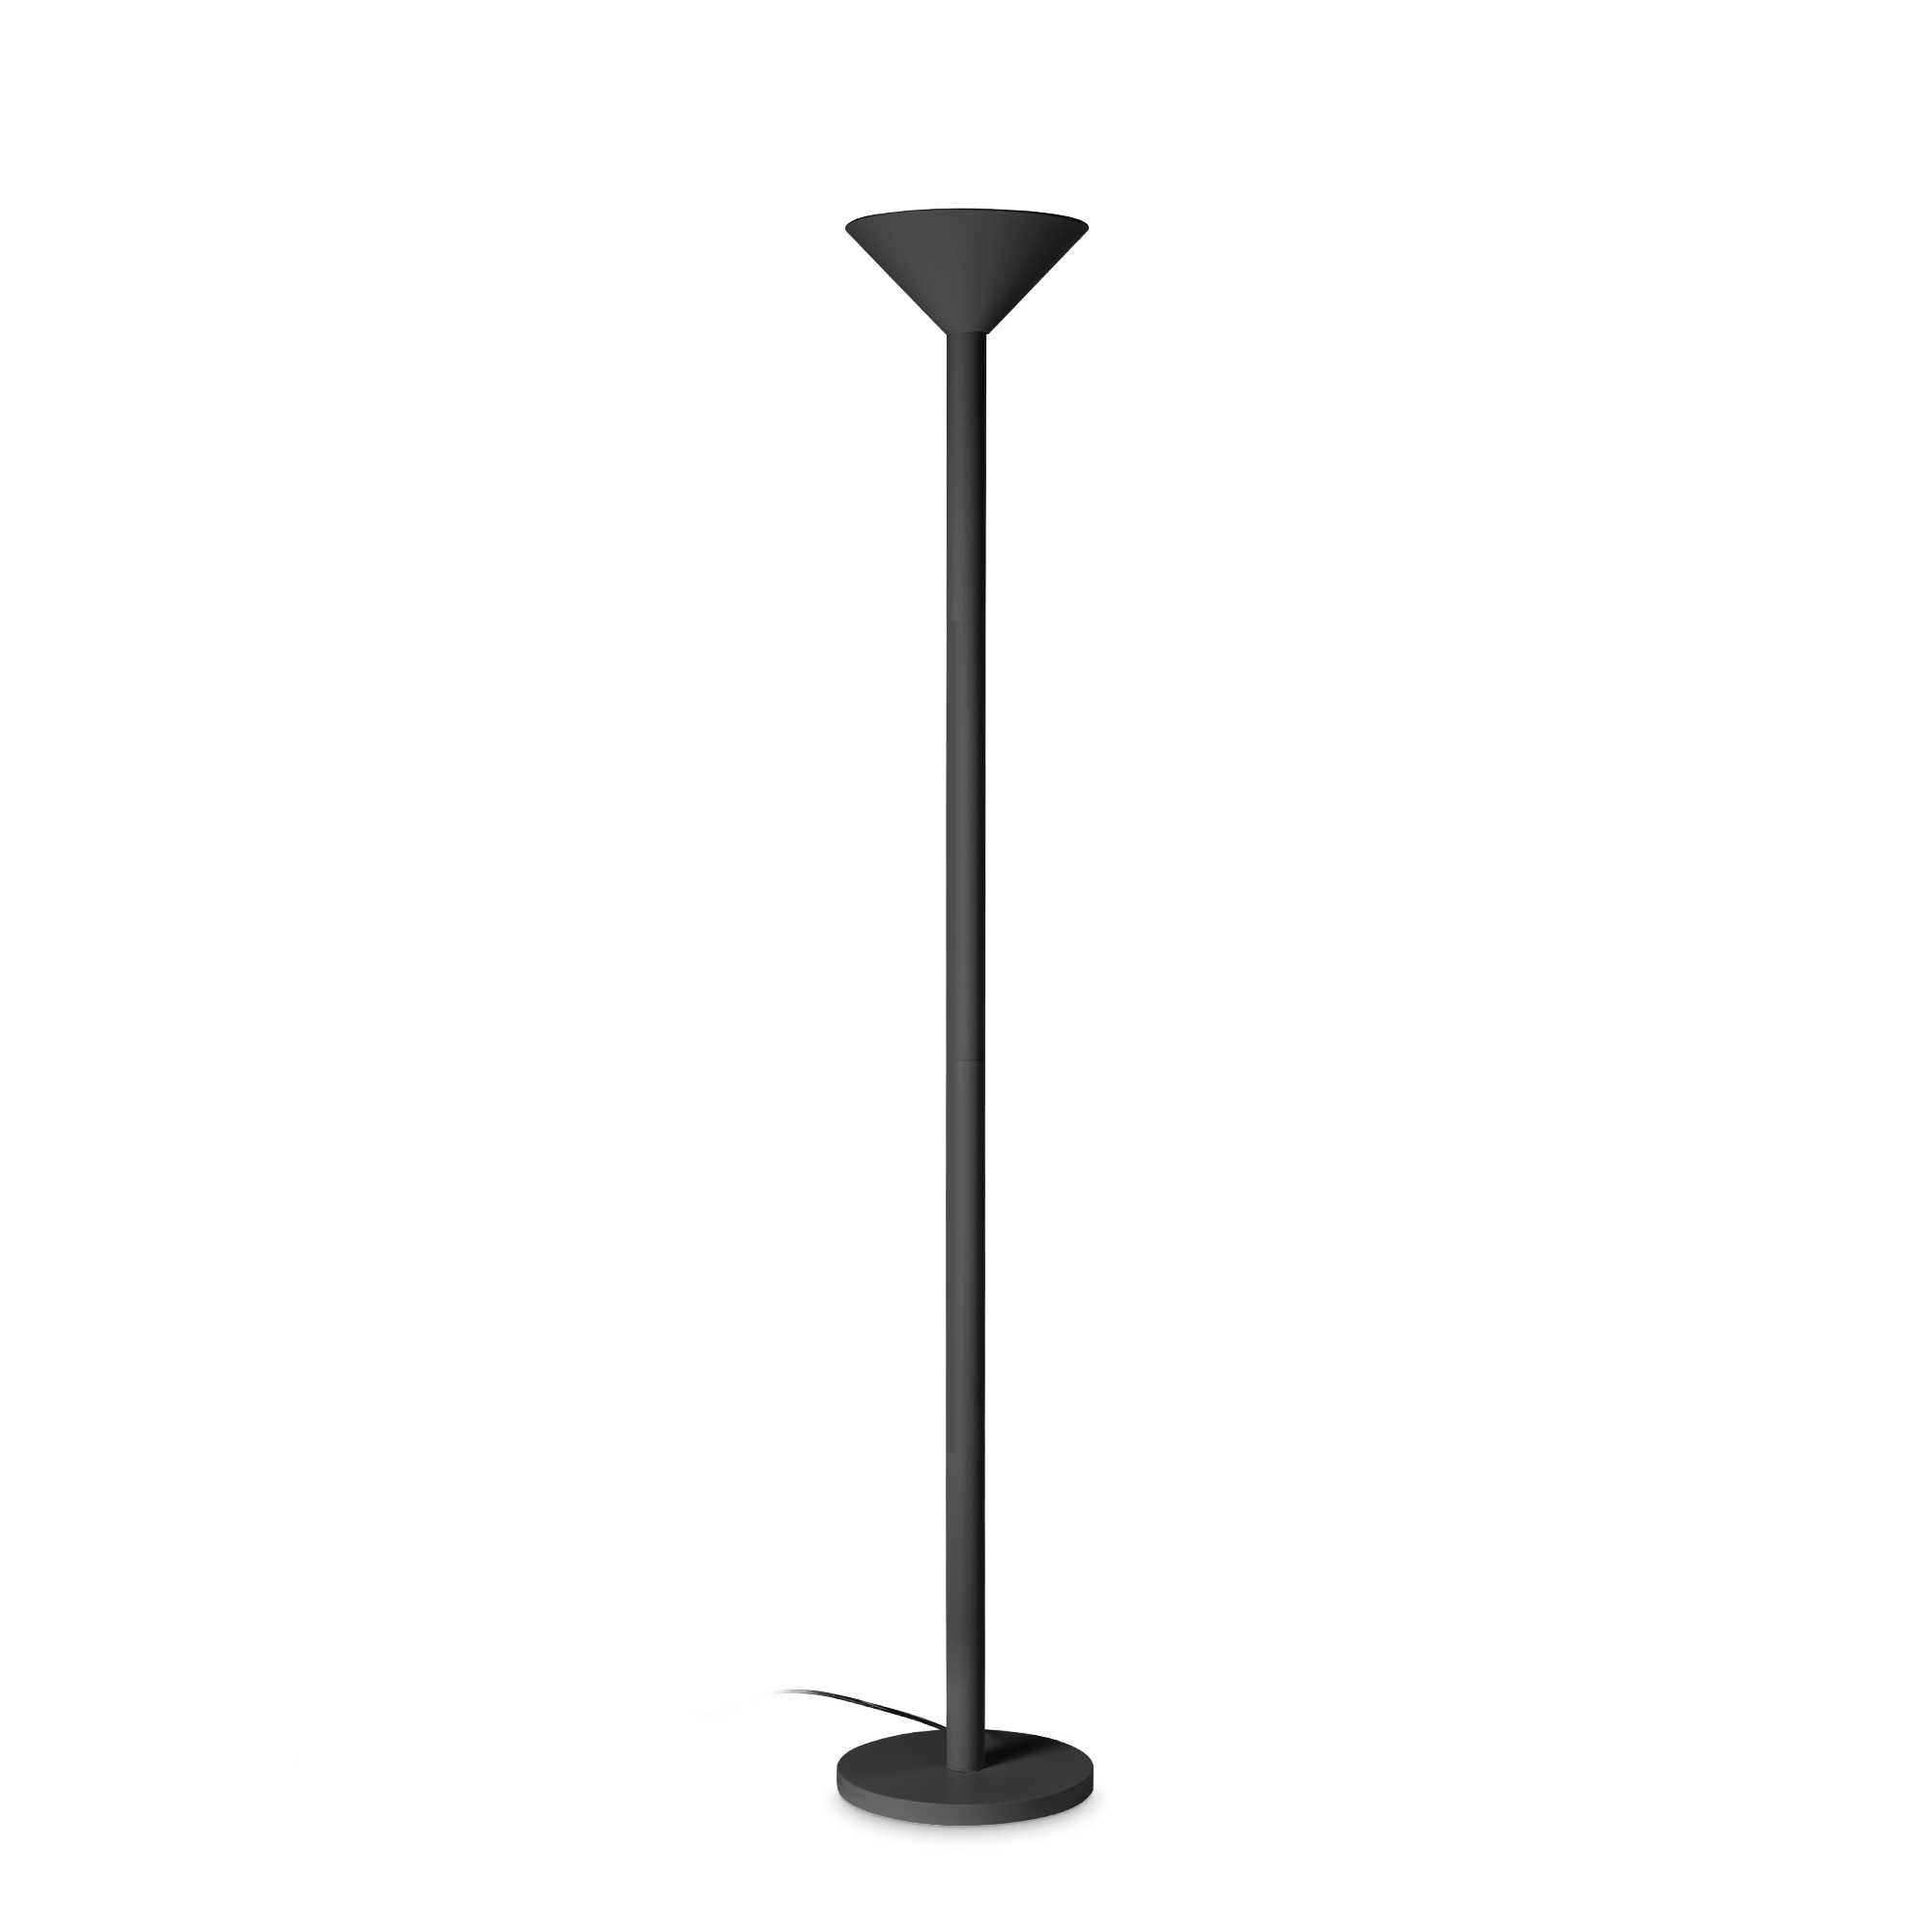 AD hotelska oprema Podna lampa Mix up mpt1- Crne boje slika proizvoda